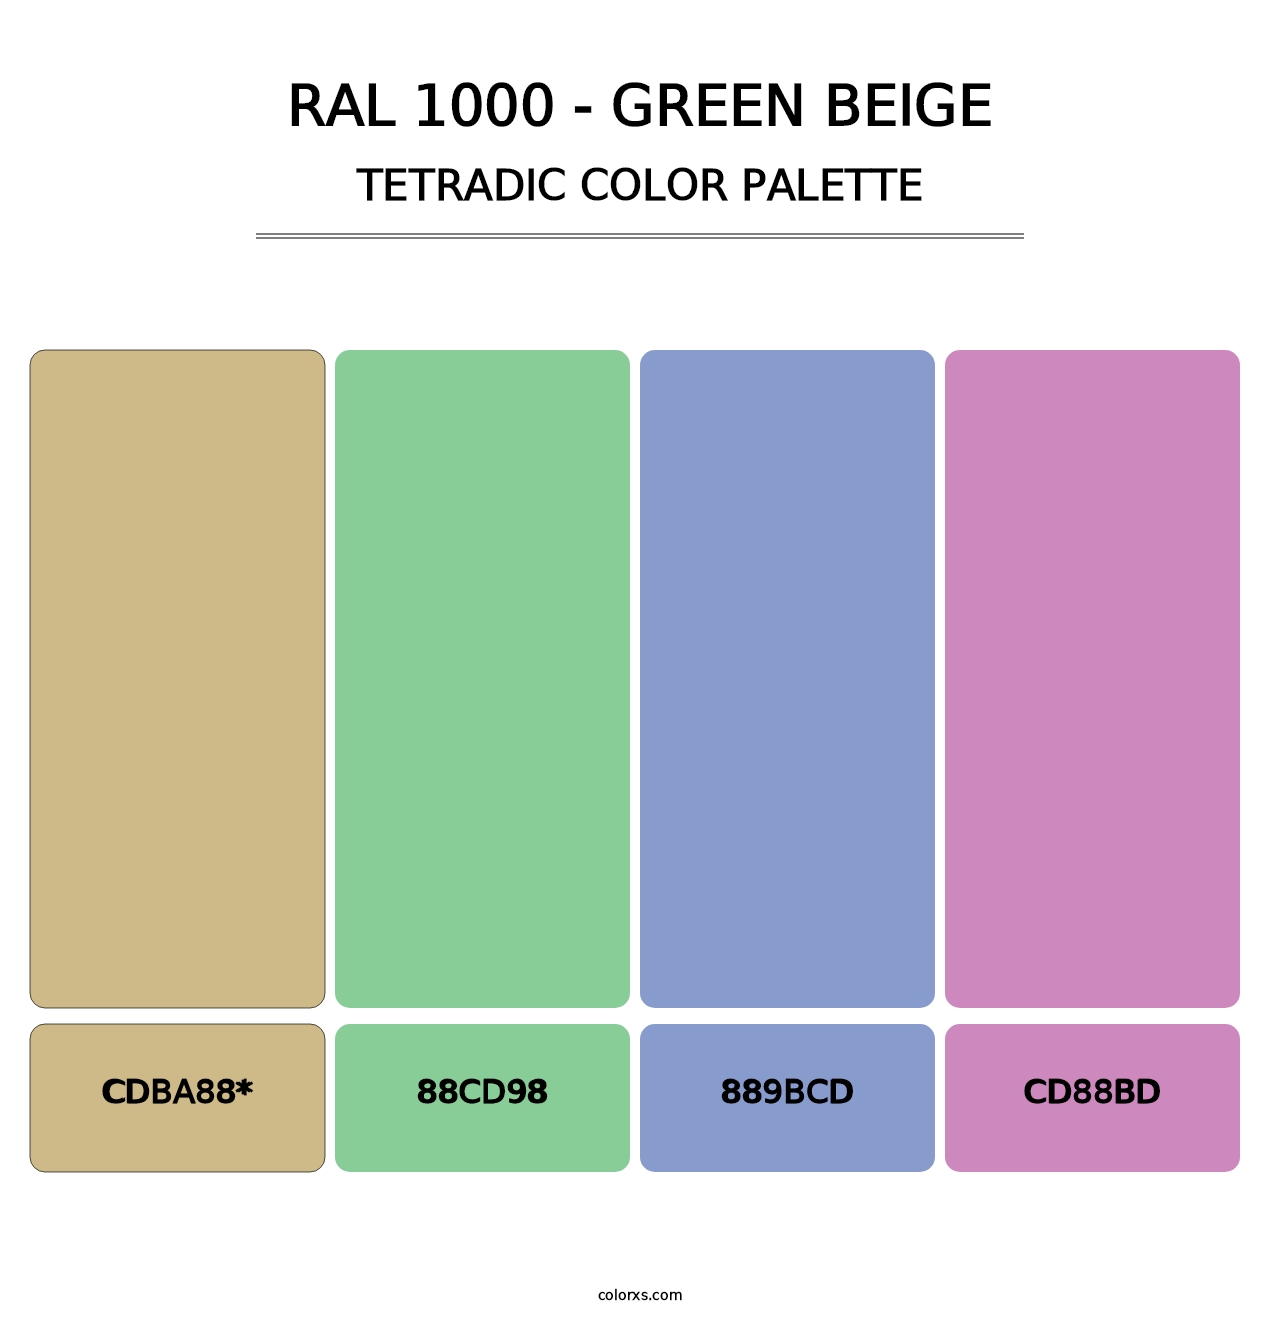 RAL 1000 - Green Beige - Tetradic Color Palette